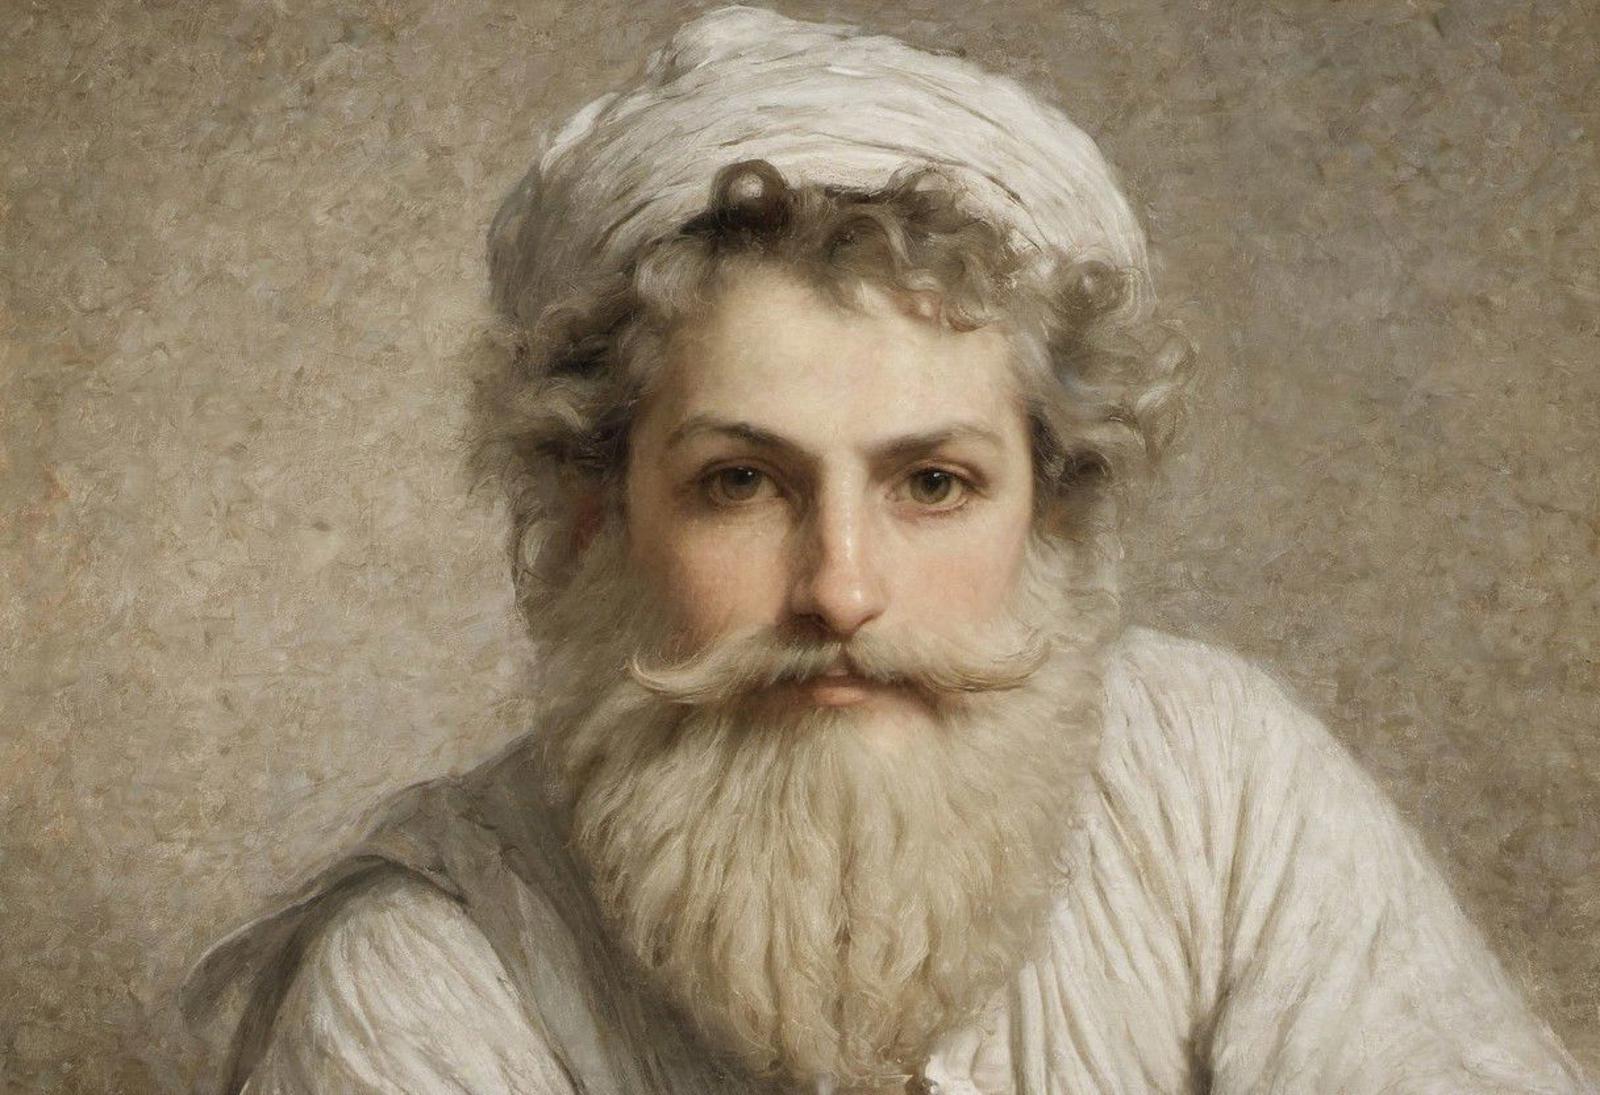 SDXL - Epic Beard, Mustache & Hair image by ArtHistorian